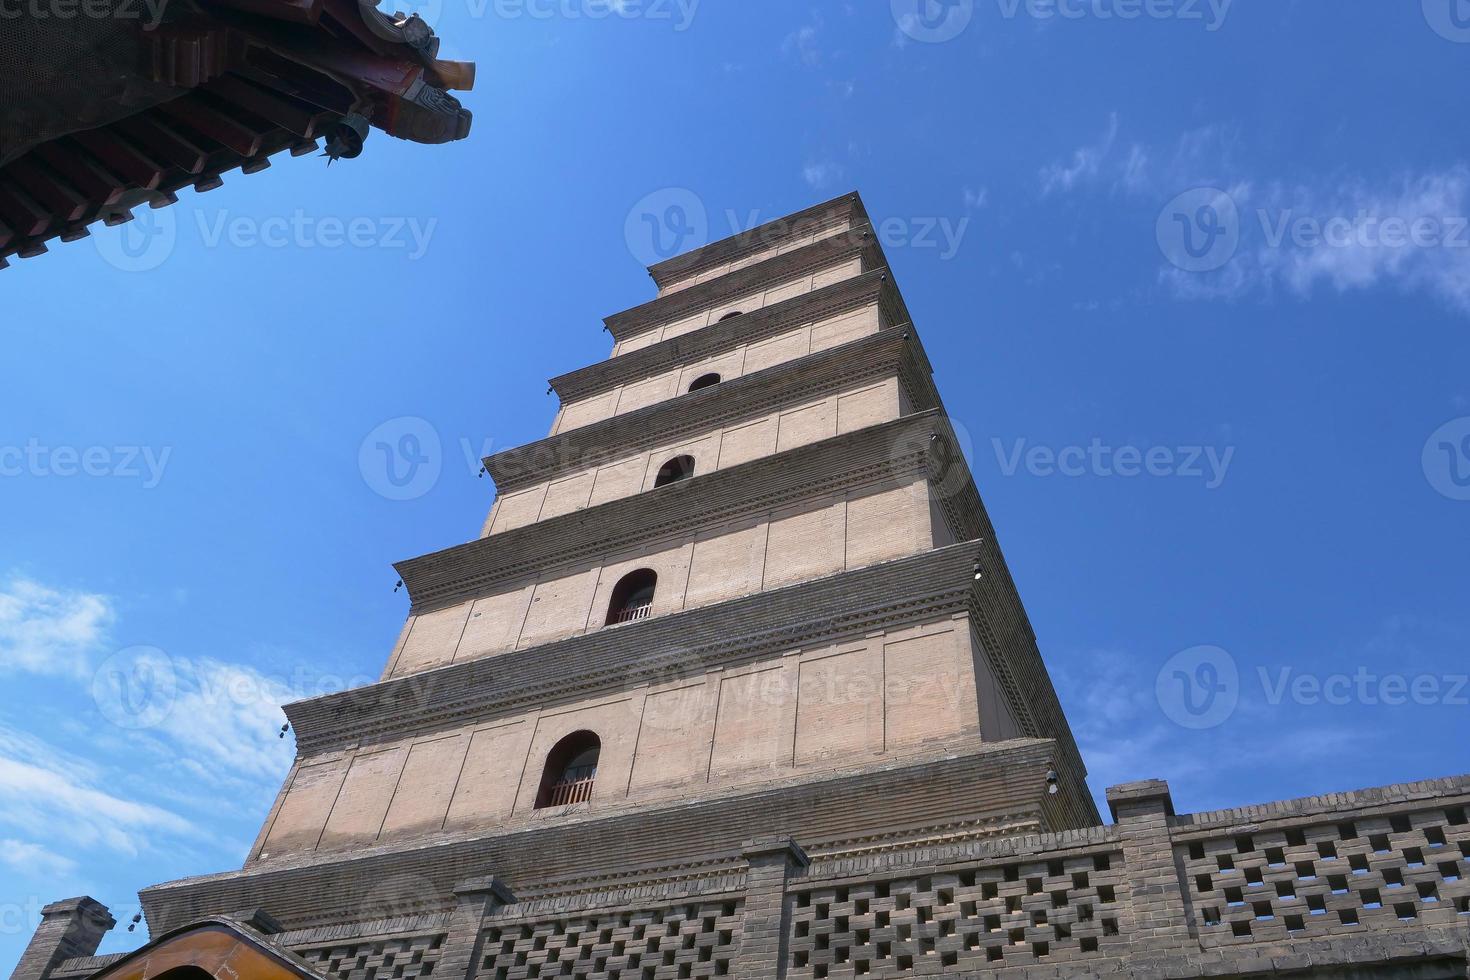 arquitetura budista do pagode dayan, china xian foto